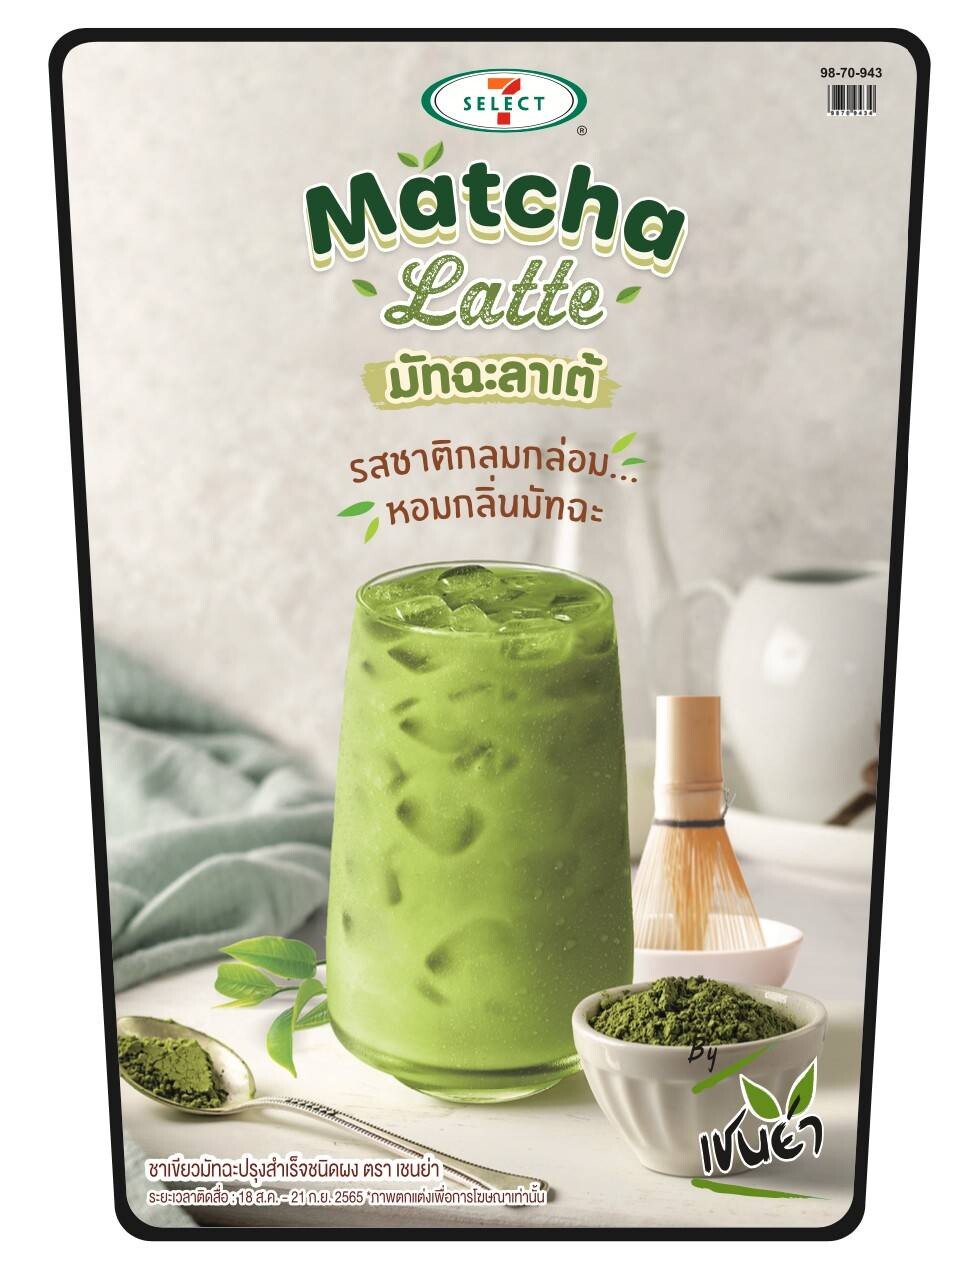 TACC พร้อมเสิร์ฟ "Matcha Latte" ตามคำเรียกร้อง! "เครื่องดื่มชาเขียวมัทฉะลาเต้ รสชาติกลมกล่อม" เริ่มวางจำหน่ายที่ร้านเซเว่นฯ